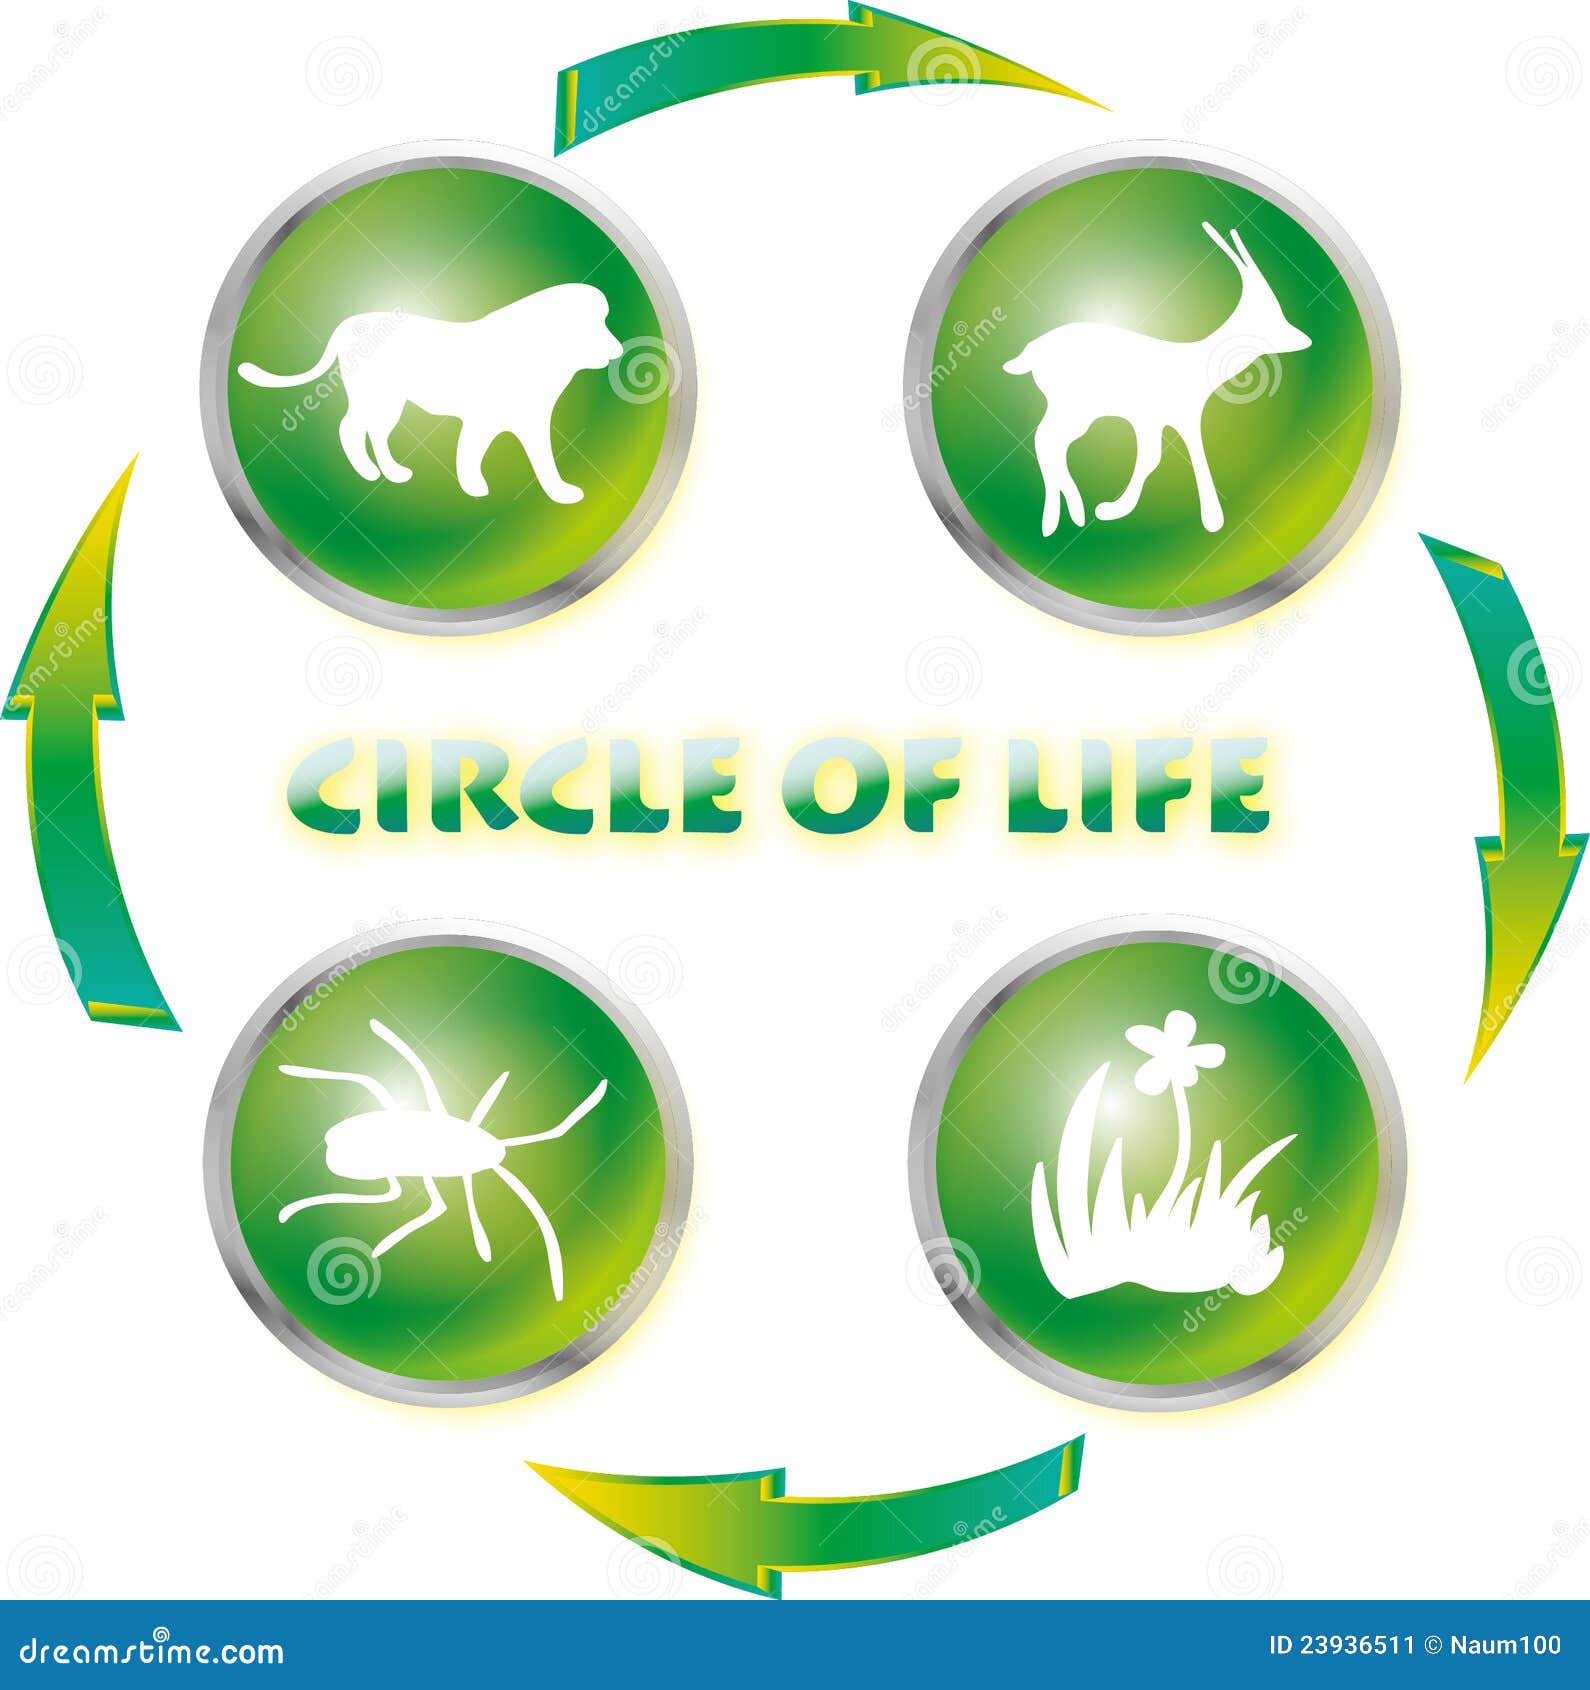 Circle Of Life Stock Illustration  Illustration Of Planet